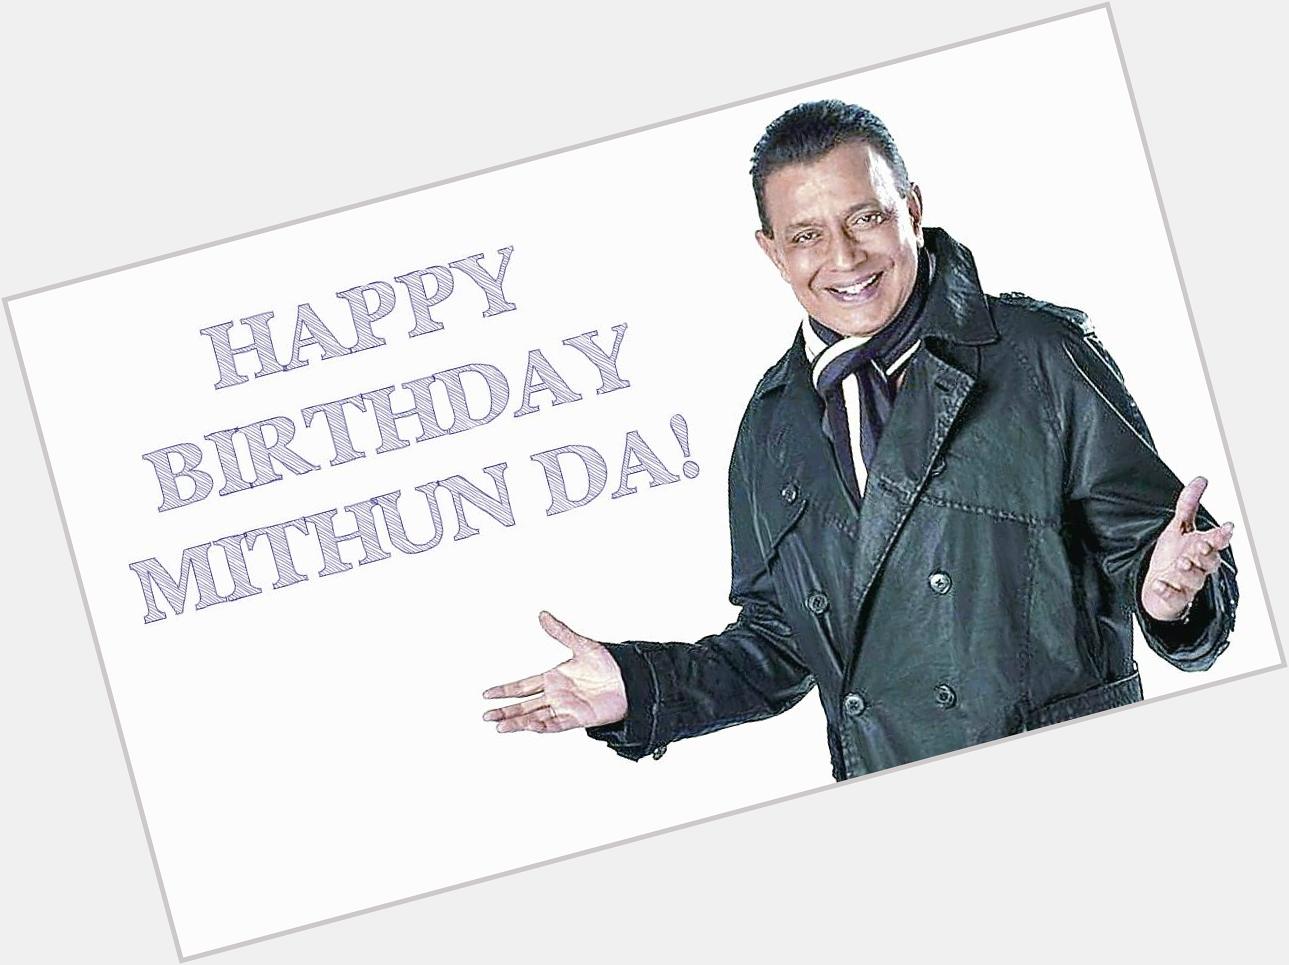 Wishing a very Happy Birthday to Mithun Chakraborty! 